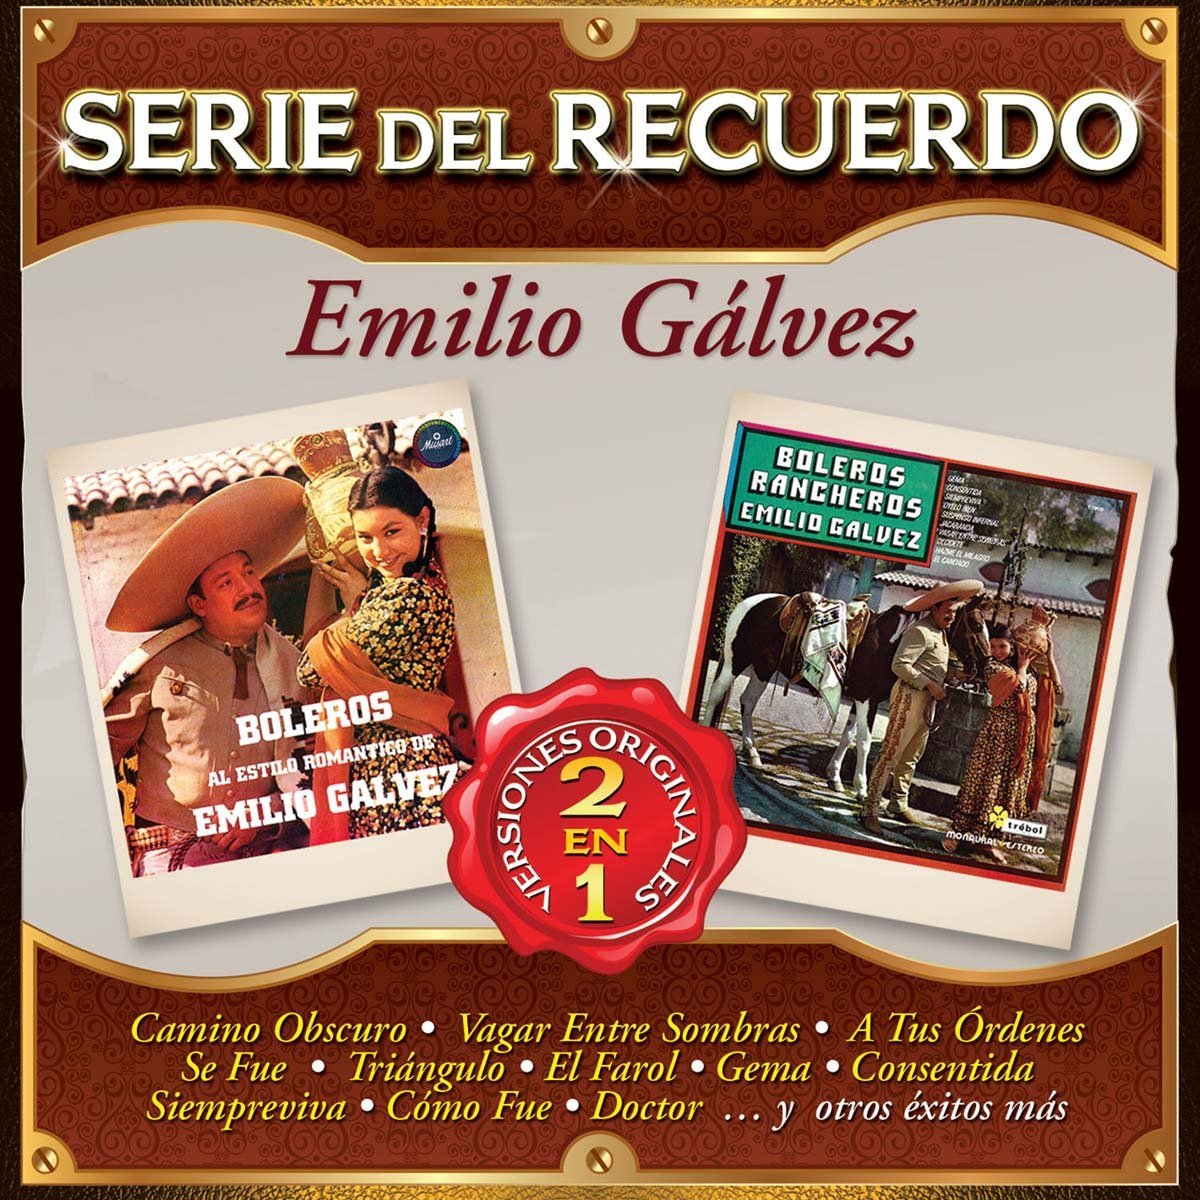 Cd Emilio Galvez Serie Del Recuerdo 2 en 1